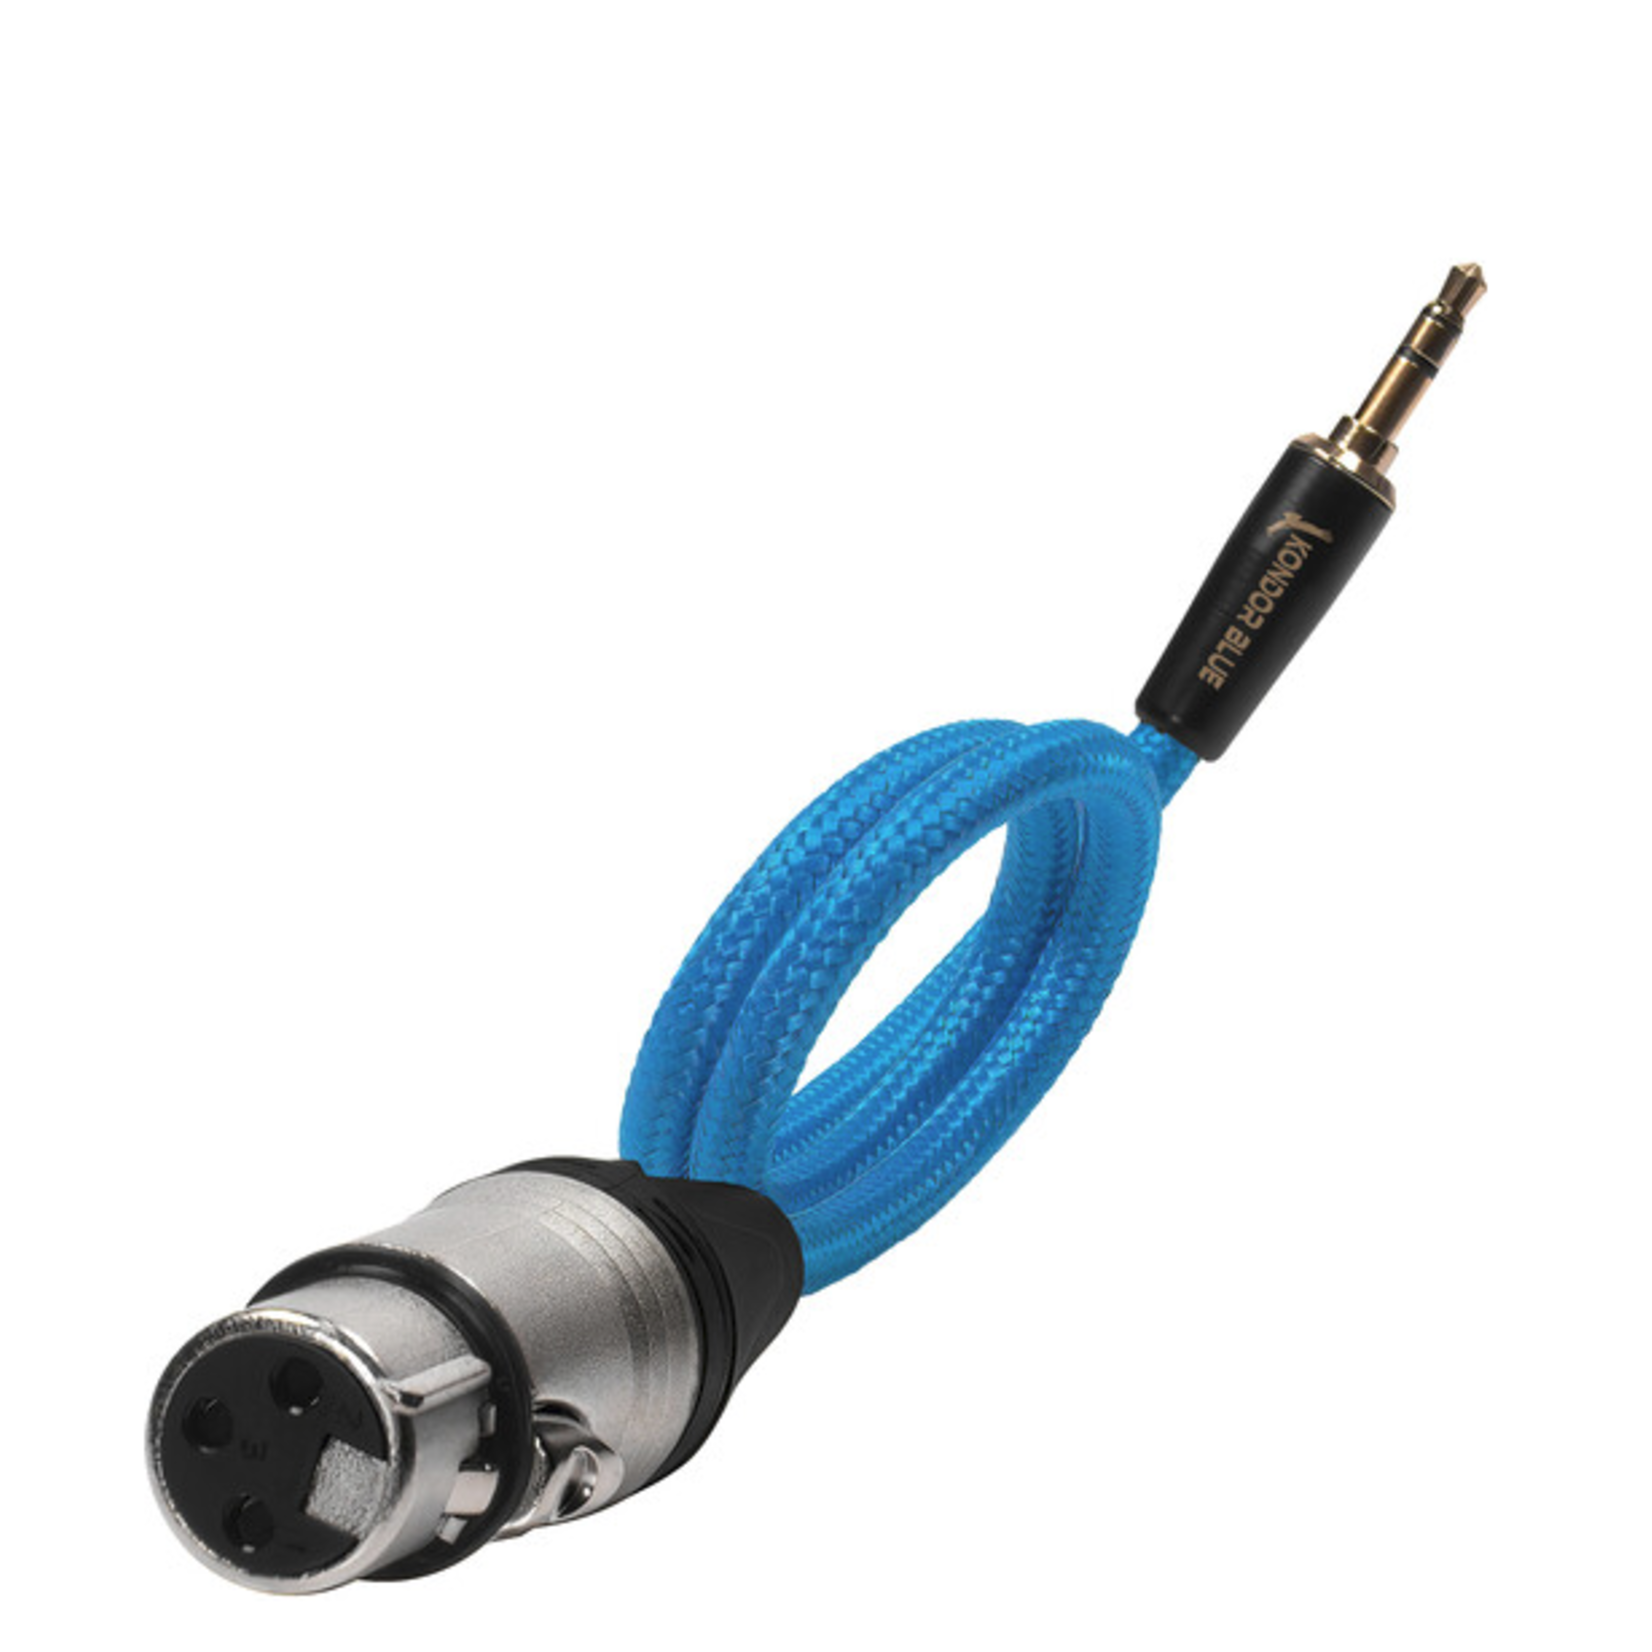 Kondor Blue Kondor Blue Braided Female XLR to 3.5mm TRS Male Audio Cable (17", Blue)